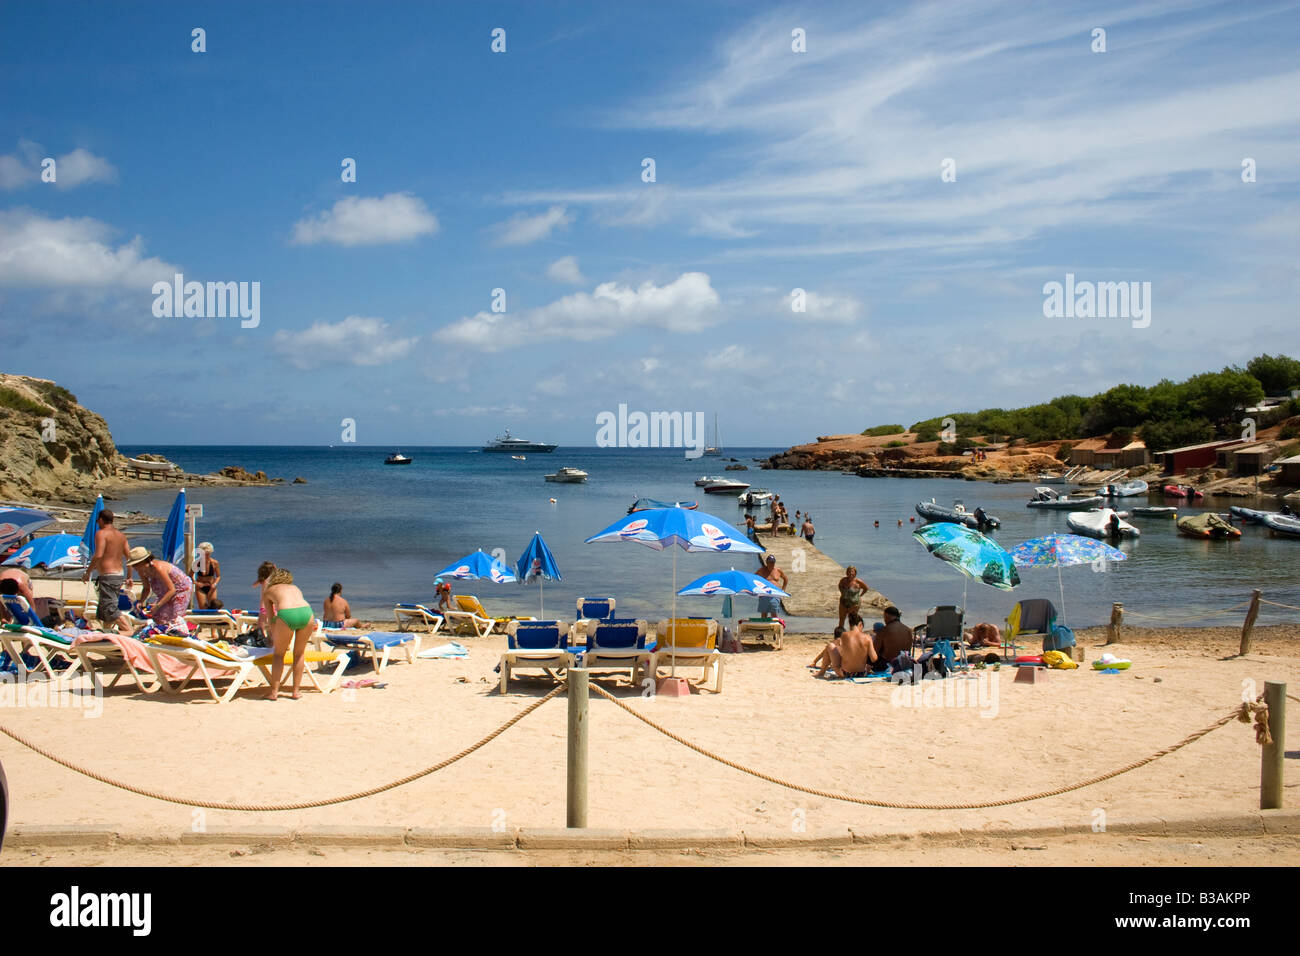 Beach and Bay, Pou des LLeo, Ibiza Stock Photo